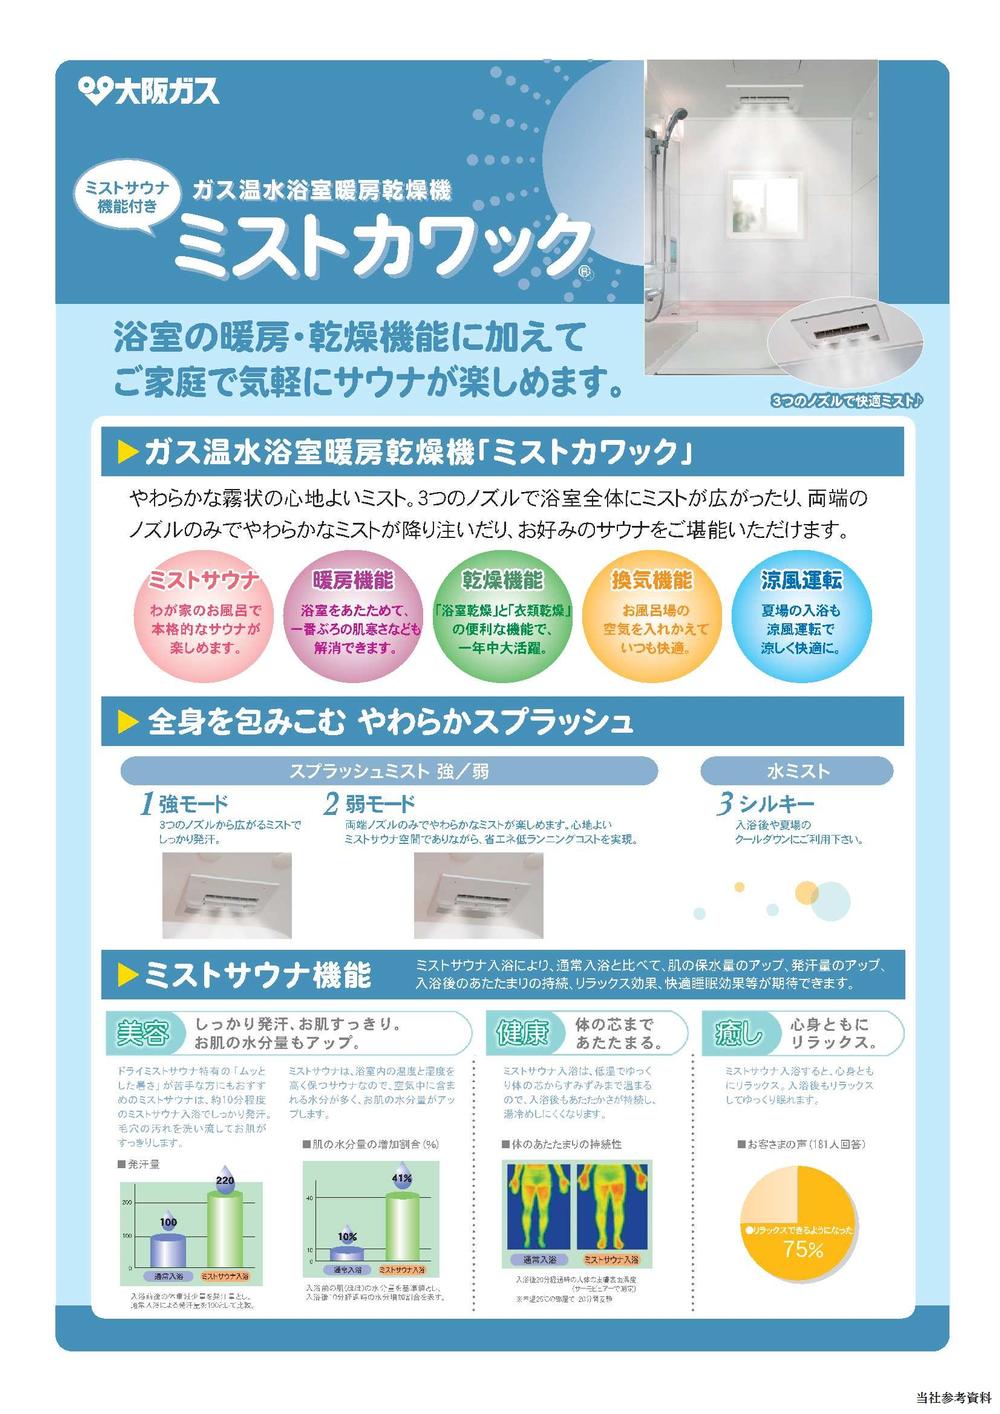 Cooling and heating ・ Air conditioning. Osaka Gas Co., Ltd. / Mist Kawakku